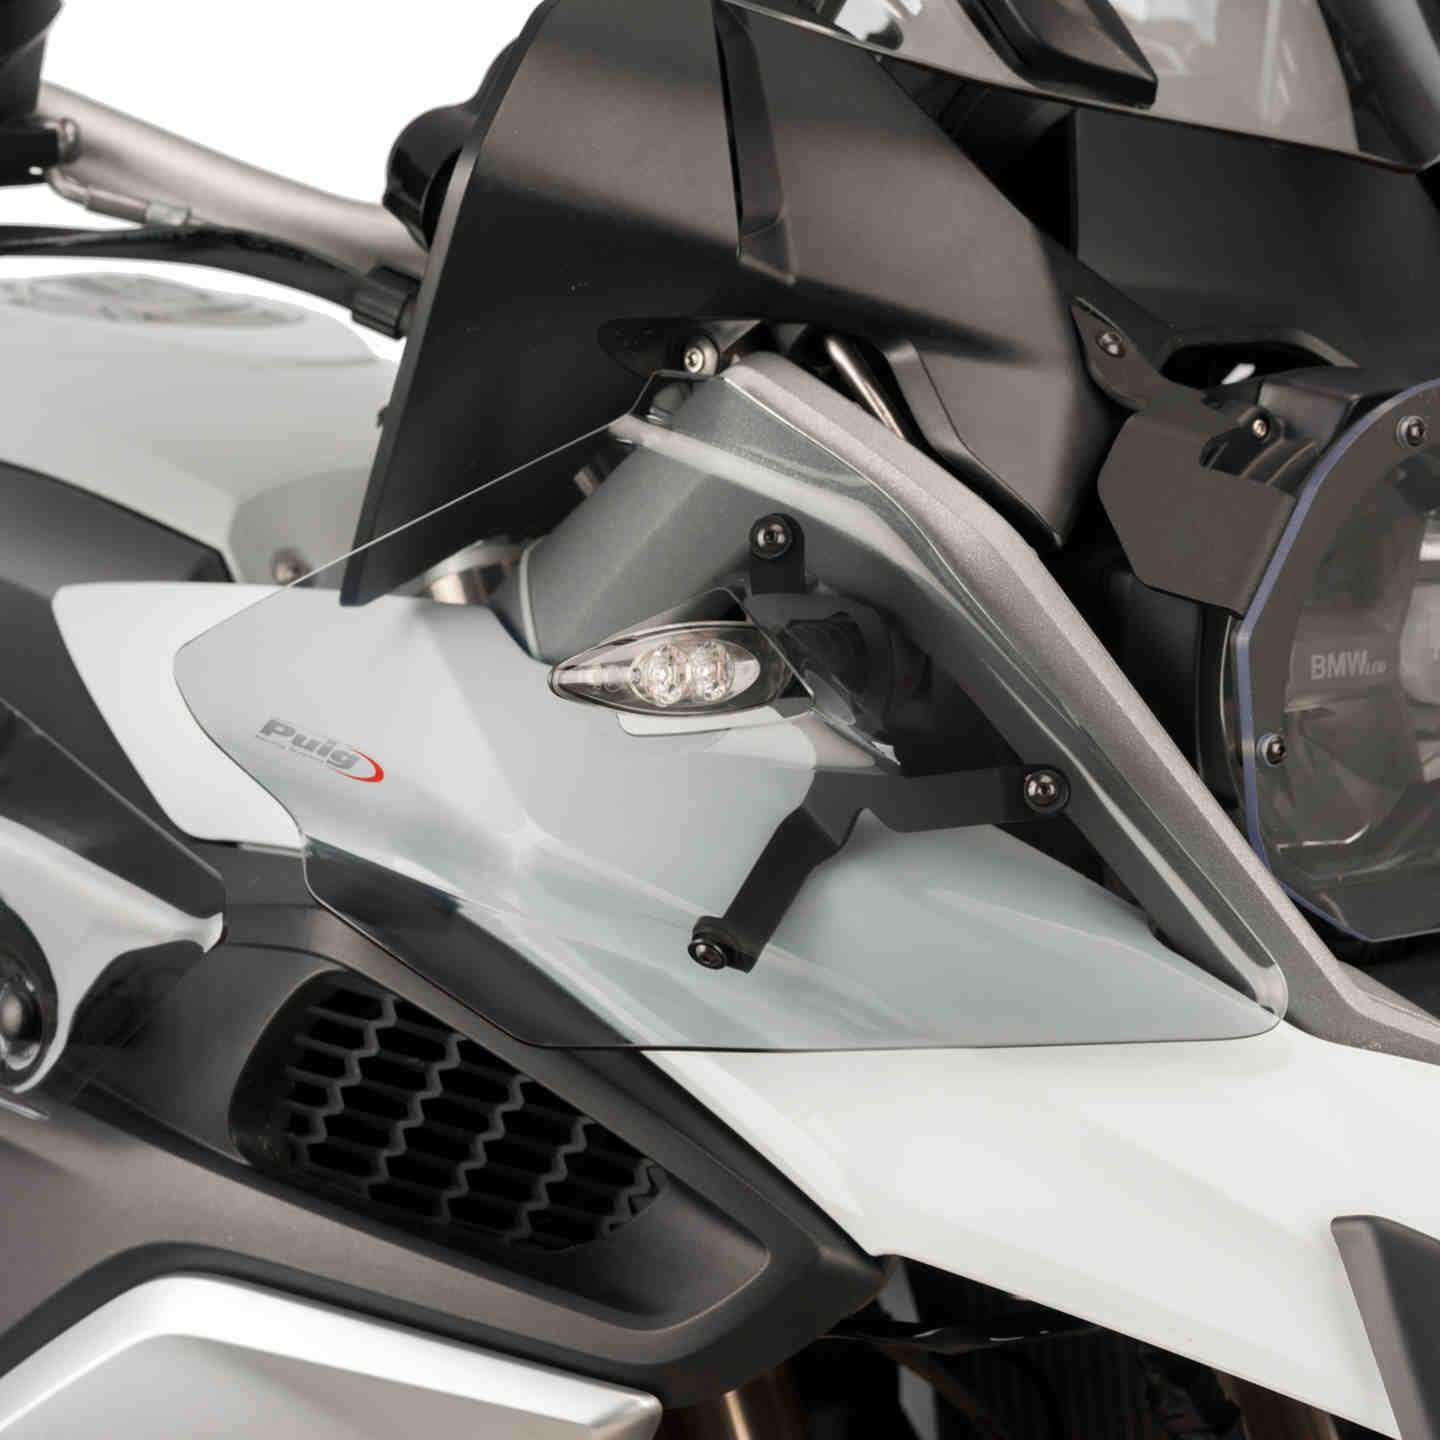 Puig Front Upper Deflectors | Light Smoke | BMW R1250 GS 2018>Current-M9847H-Wind Deflectors-Pyramid Motorcycle Accessories